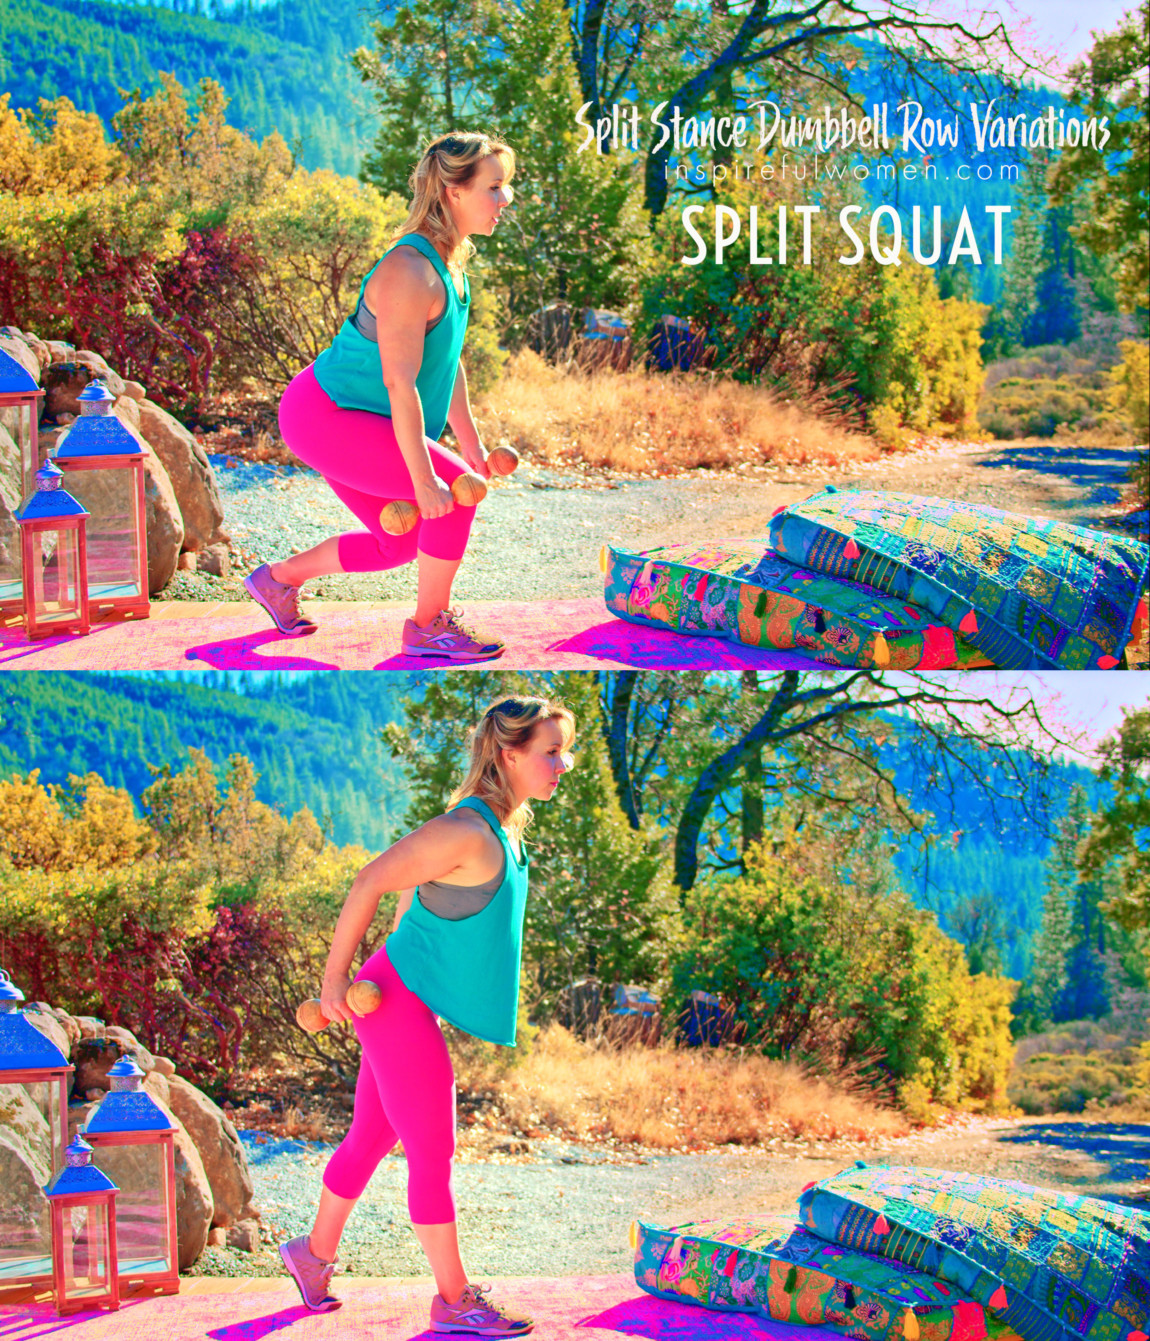 split-squat-dumbbell-row-lat-latissimus-dorsi-exercise-side-view-variations